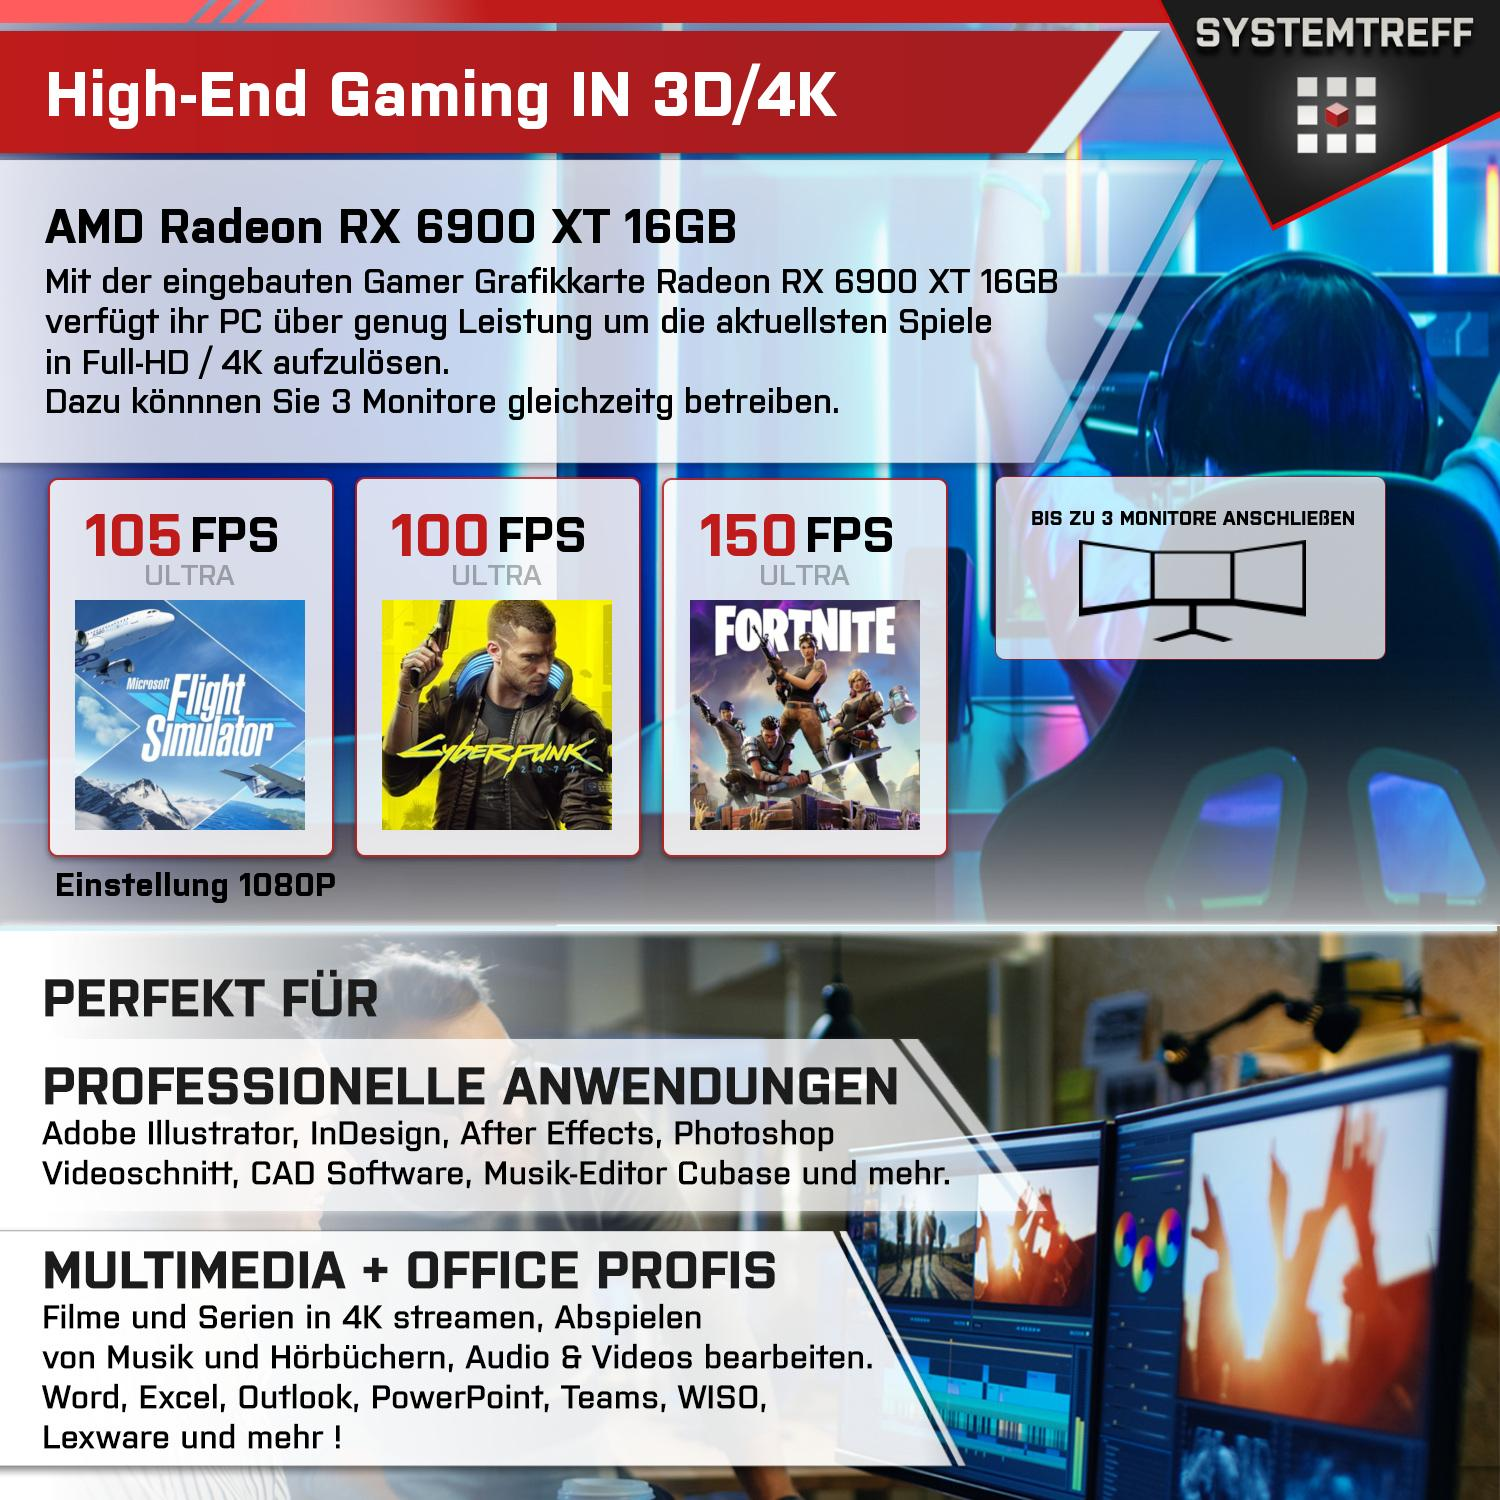 SYSTEMTREFF Gaming Komplett mit GB 1000 Komplett mSSD, GDDR6, i9-11900K 16GB RX Intel 6900 RAM, PC GB GB 16 XT Core i9-11900K, AMD Prozessor, Radeon 32